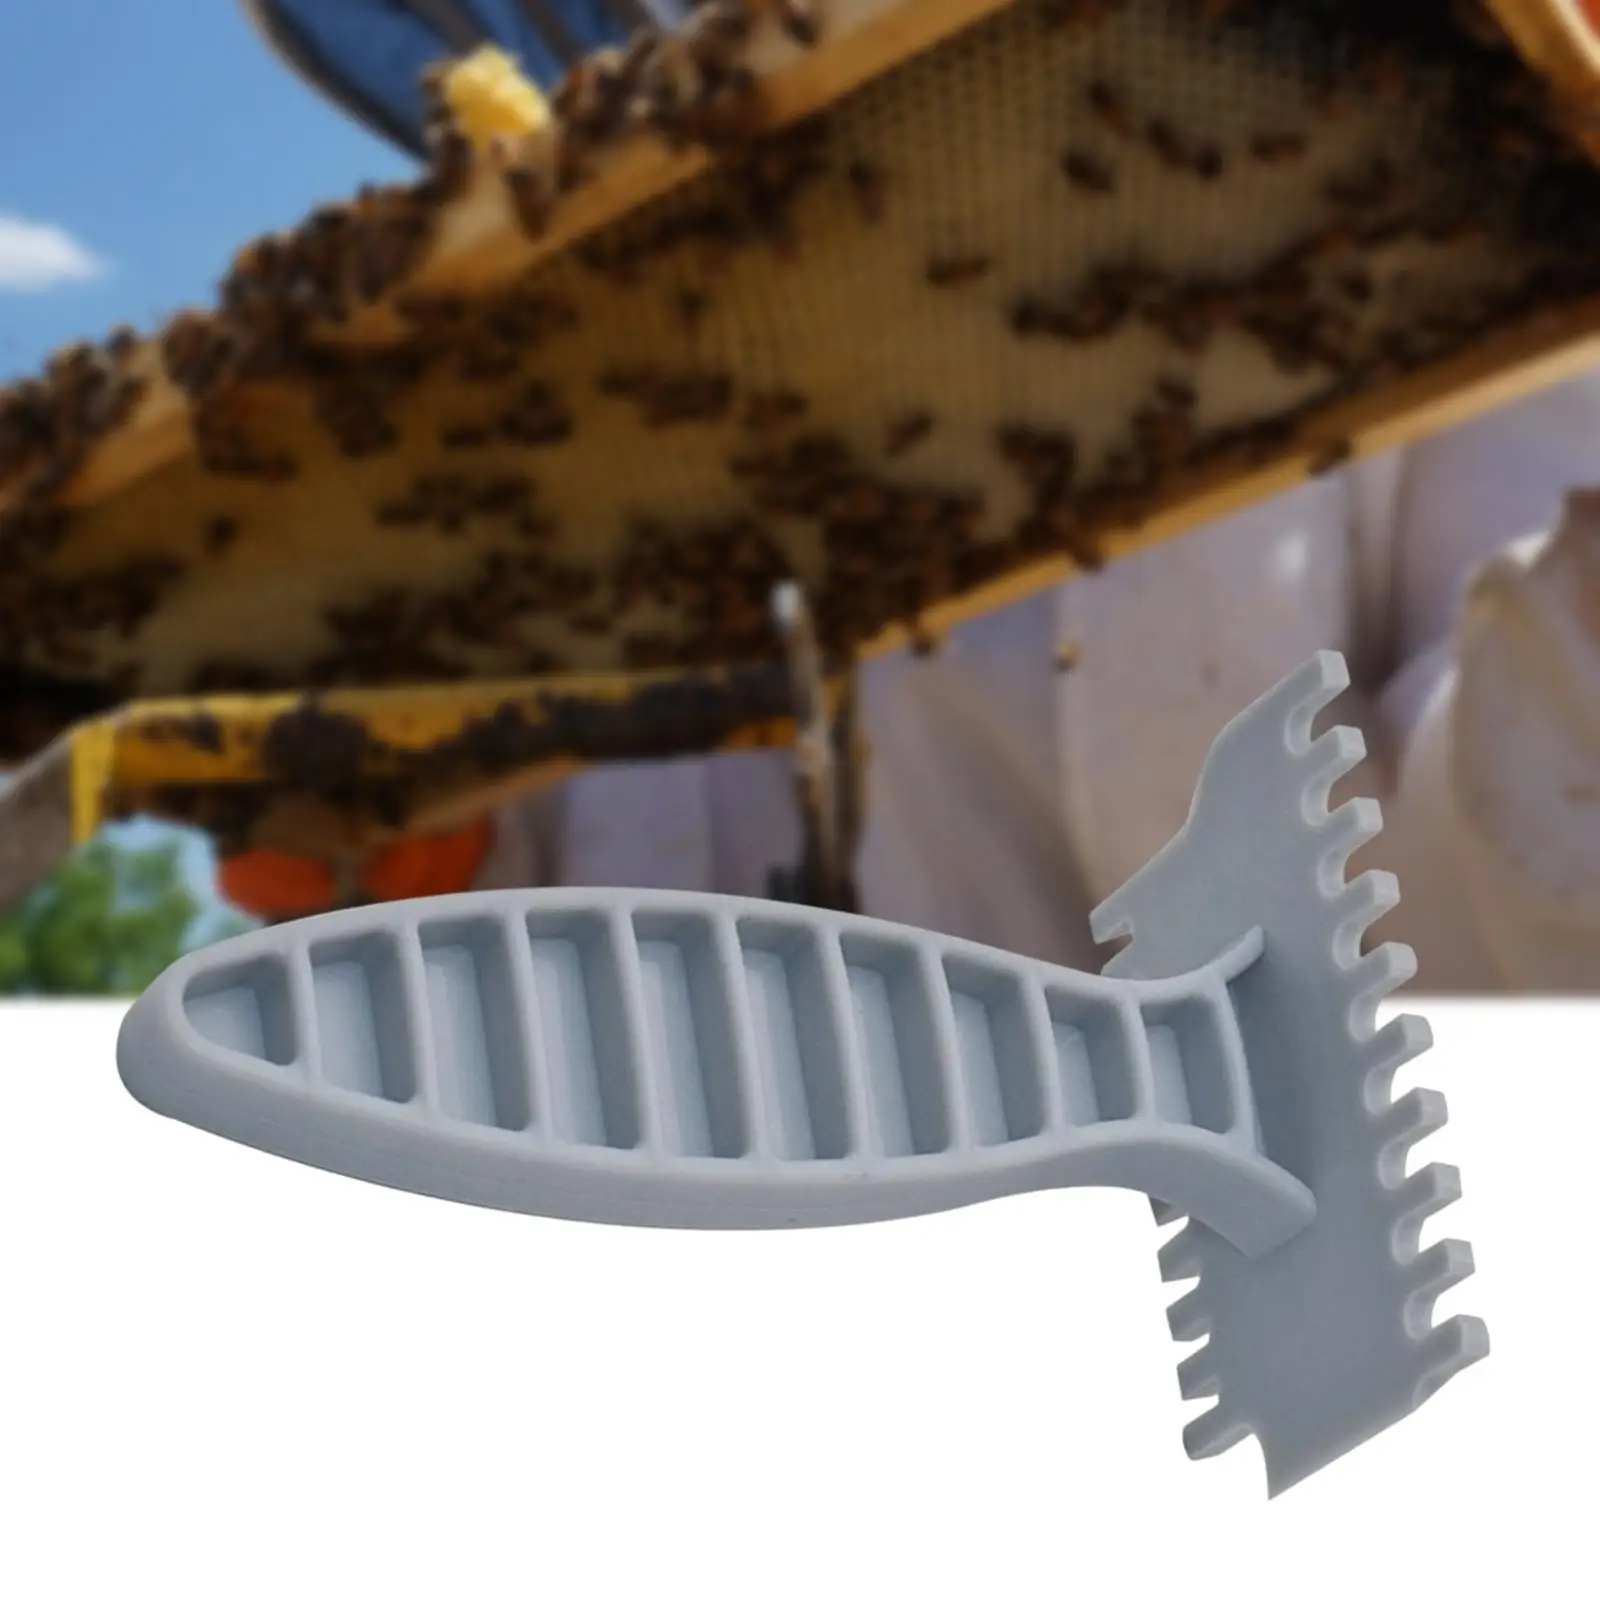 Professional Beekeeping Cleaner Beekeeper Tool for Garden Farm